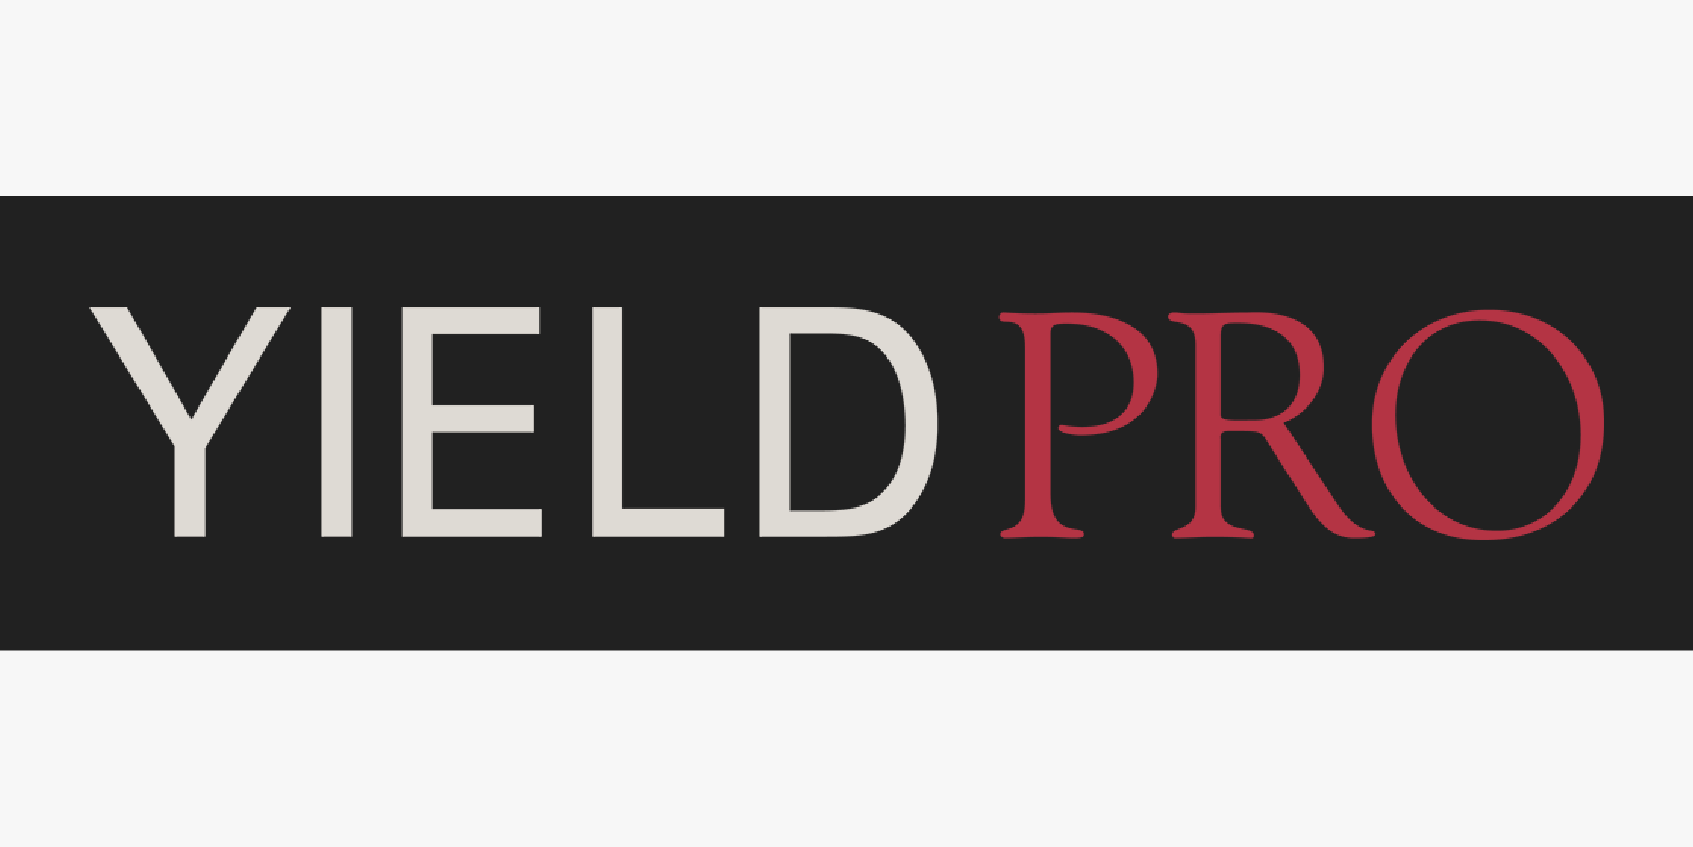 Yield Pro